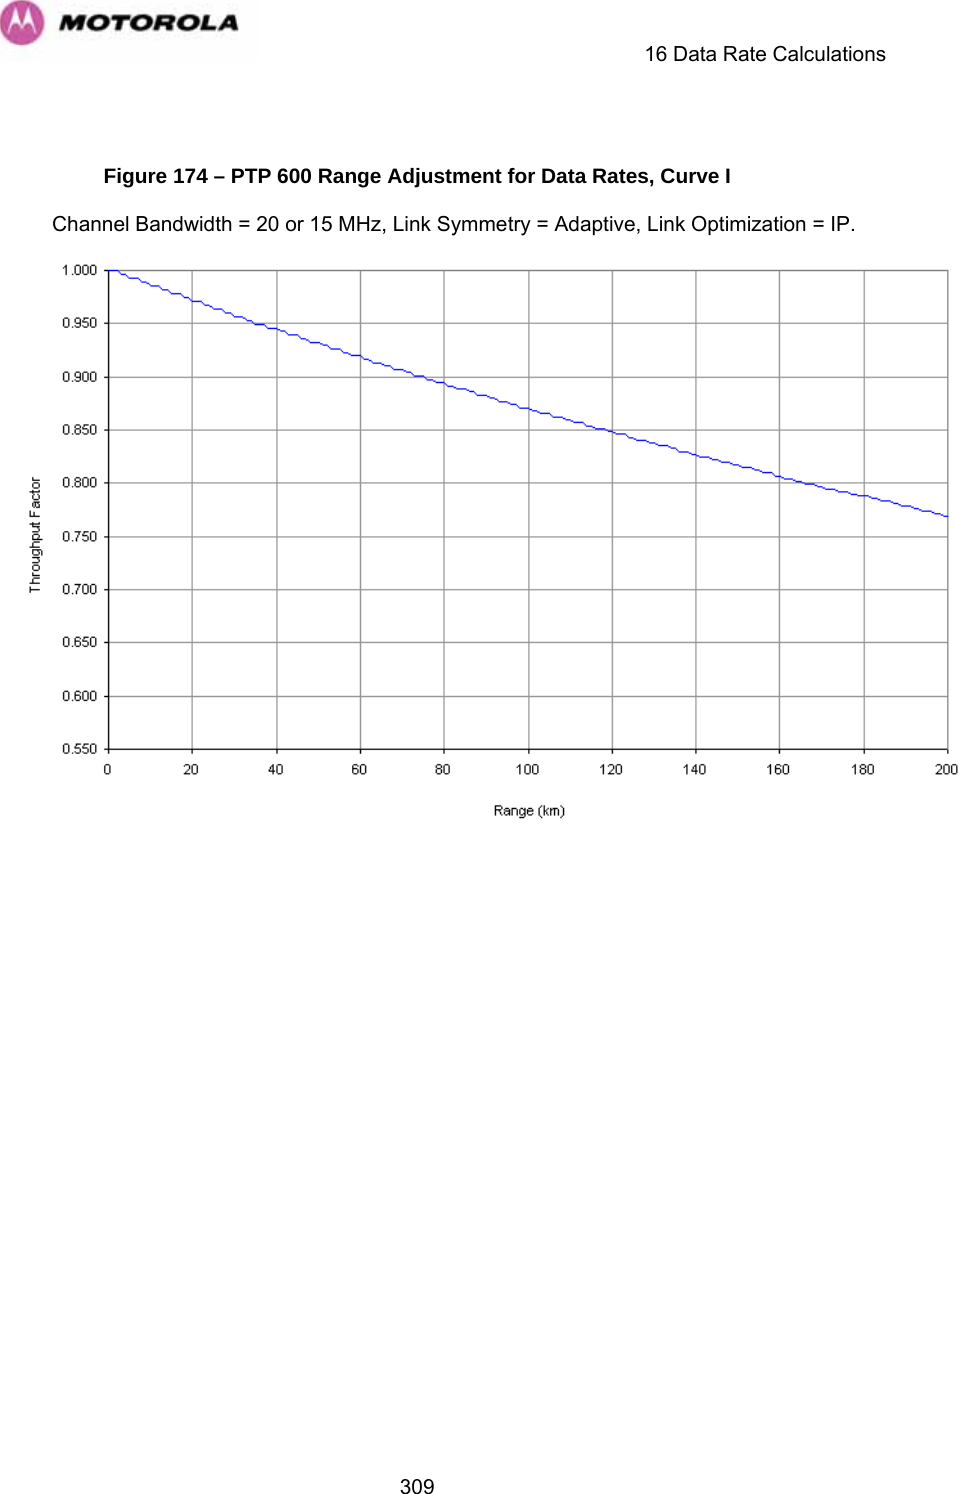     16 Data Rate Calculations  309 Figure 174 – PTP 600 Range Adjustment for Data Rates, Curve I Channel Bandwidth = 20 or 15 MHz, Link Symmetry = Adaptive, Link Optimization = IP.  